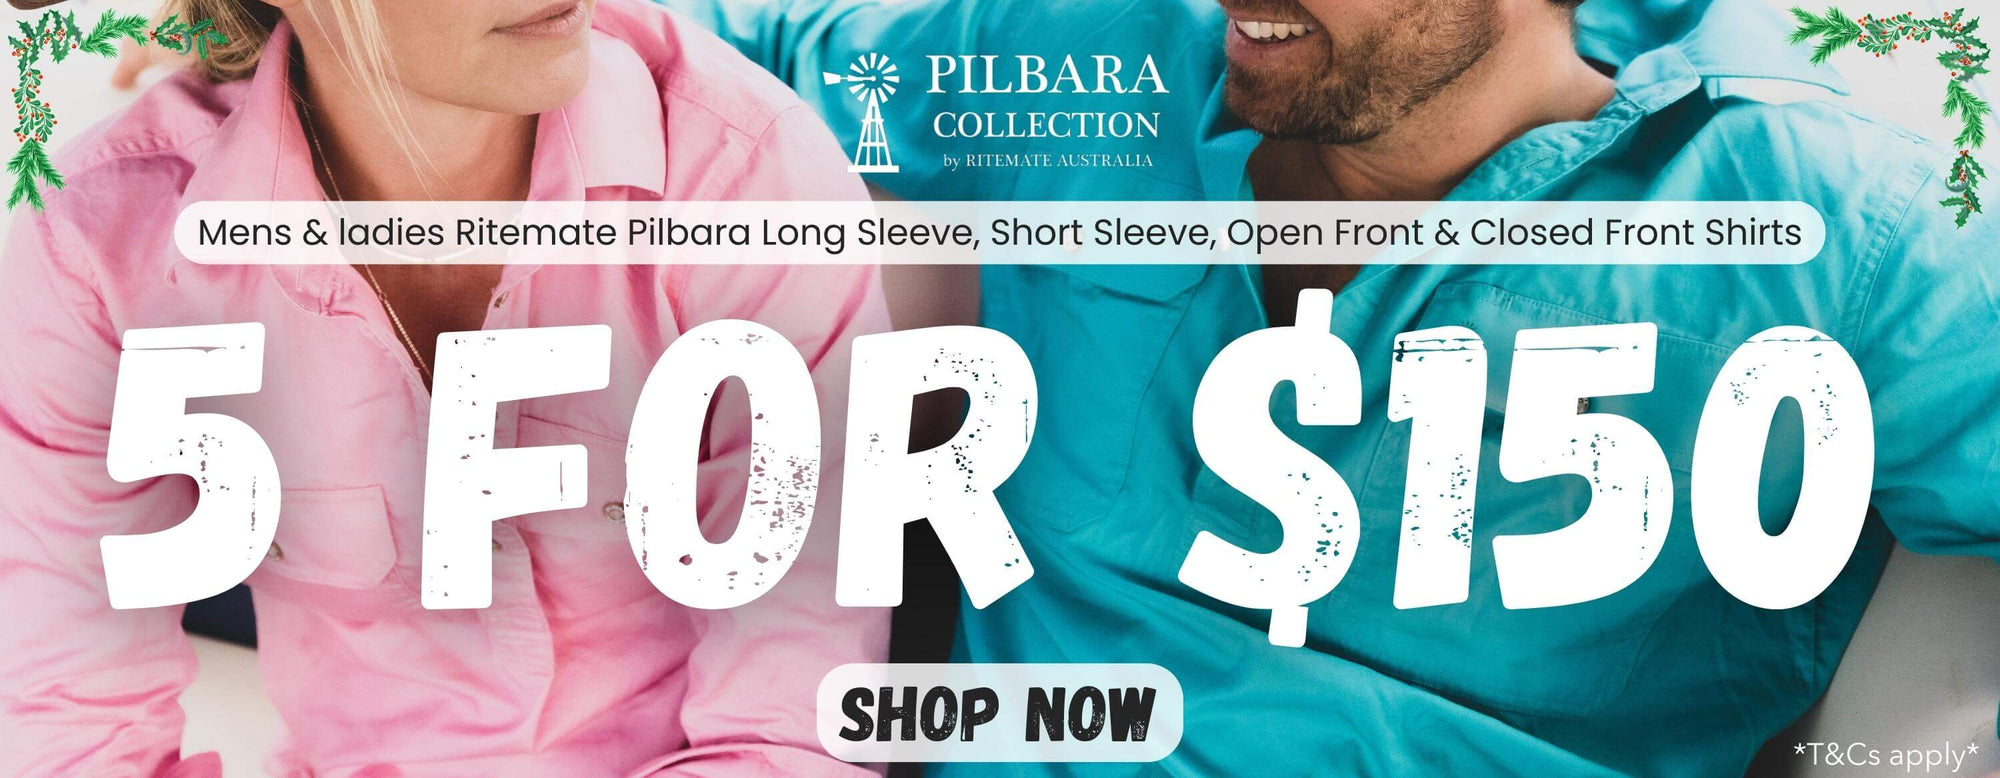 Men's & Ladie's Ritemate Pilbara Shirts, 5 for $150